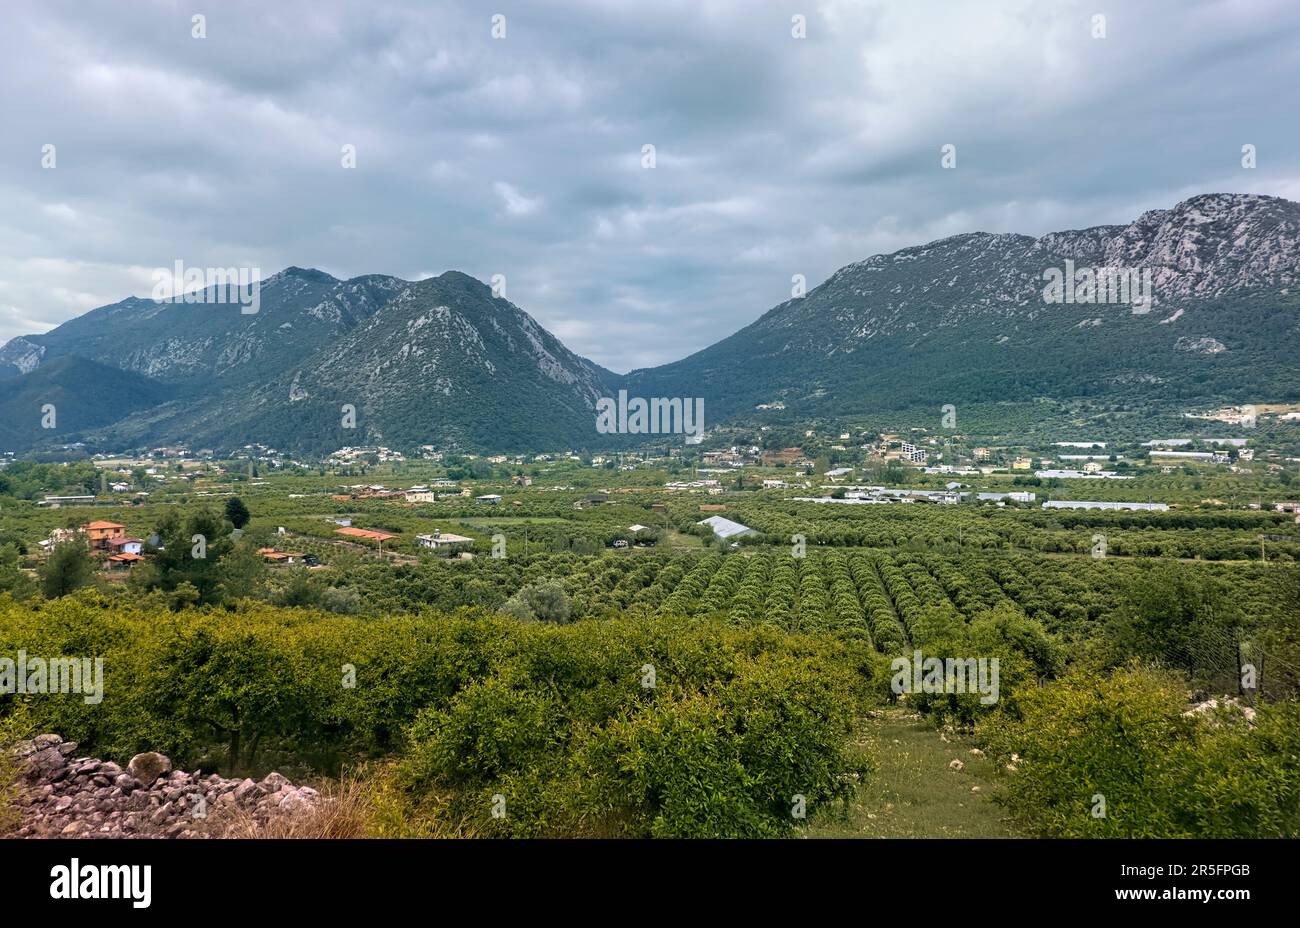 The Gelidonya Peninsula and mountains, seen from Adrasan, Turkey Stock Photo